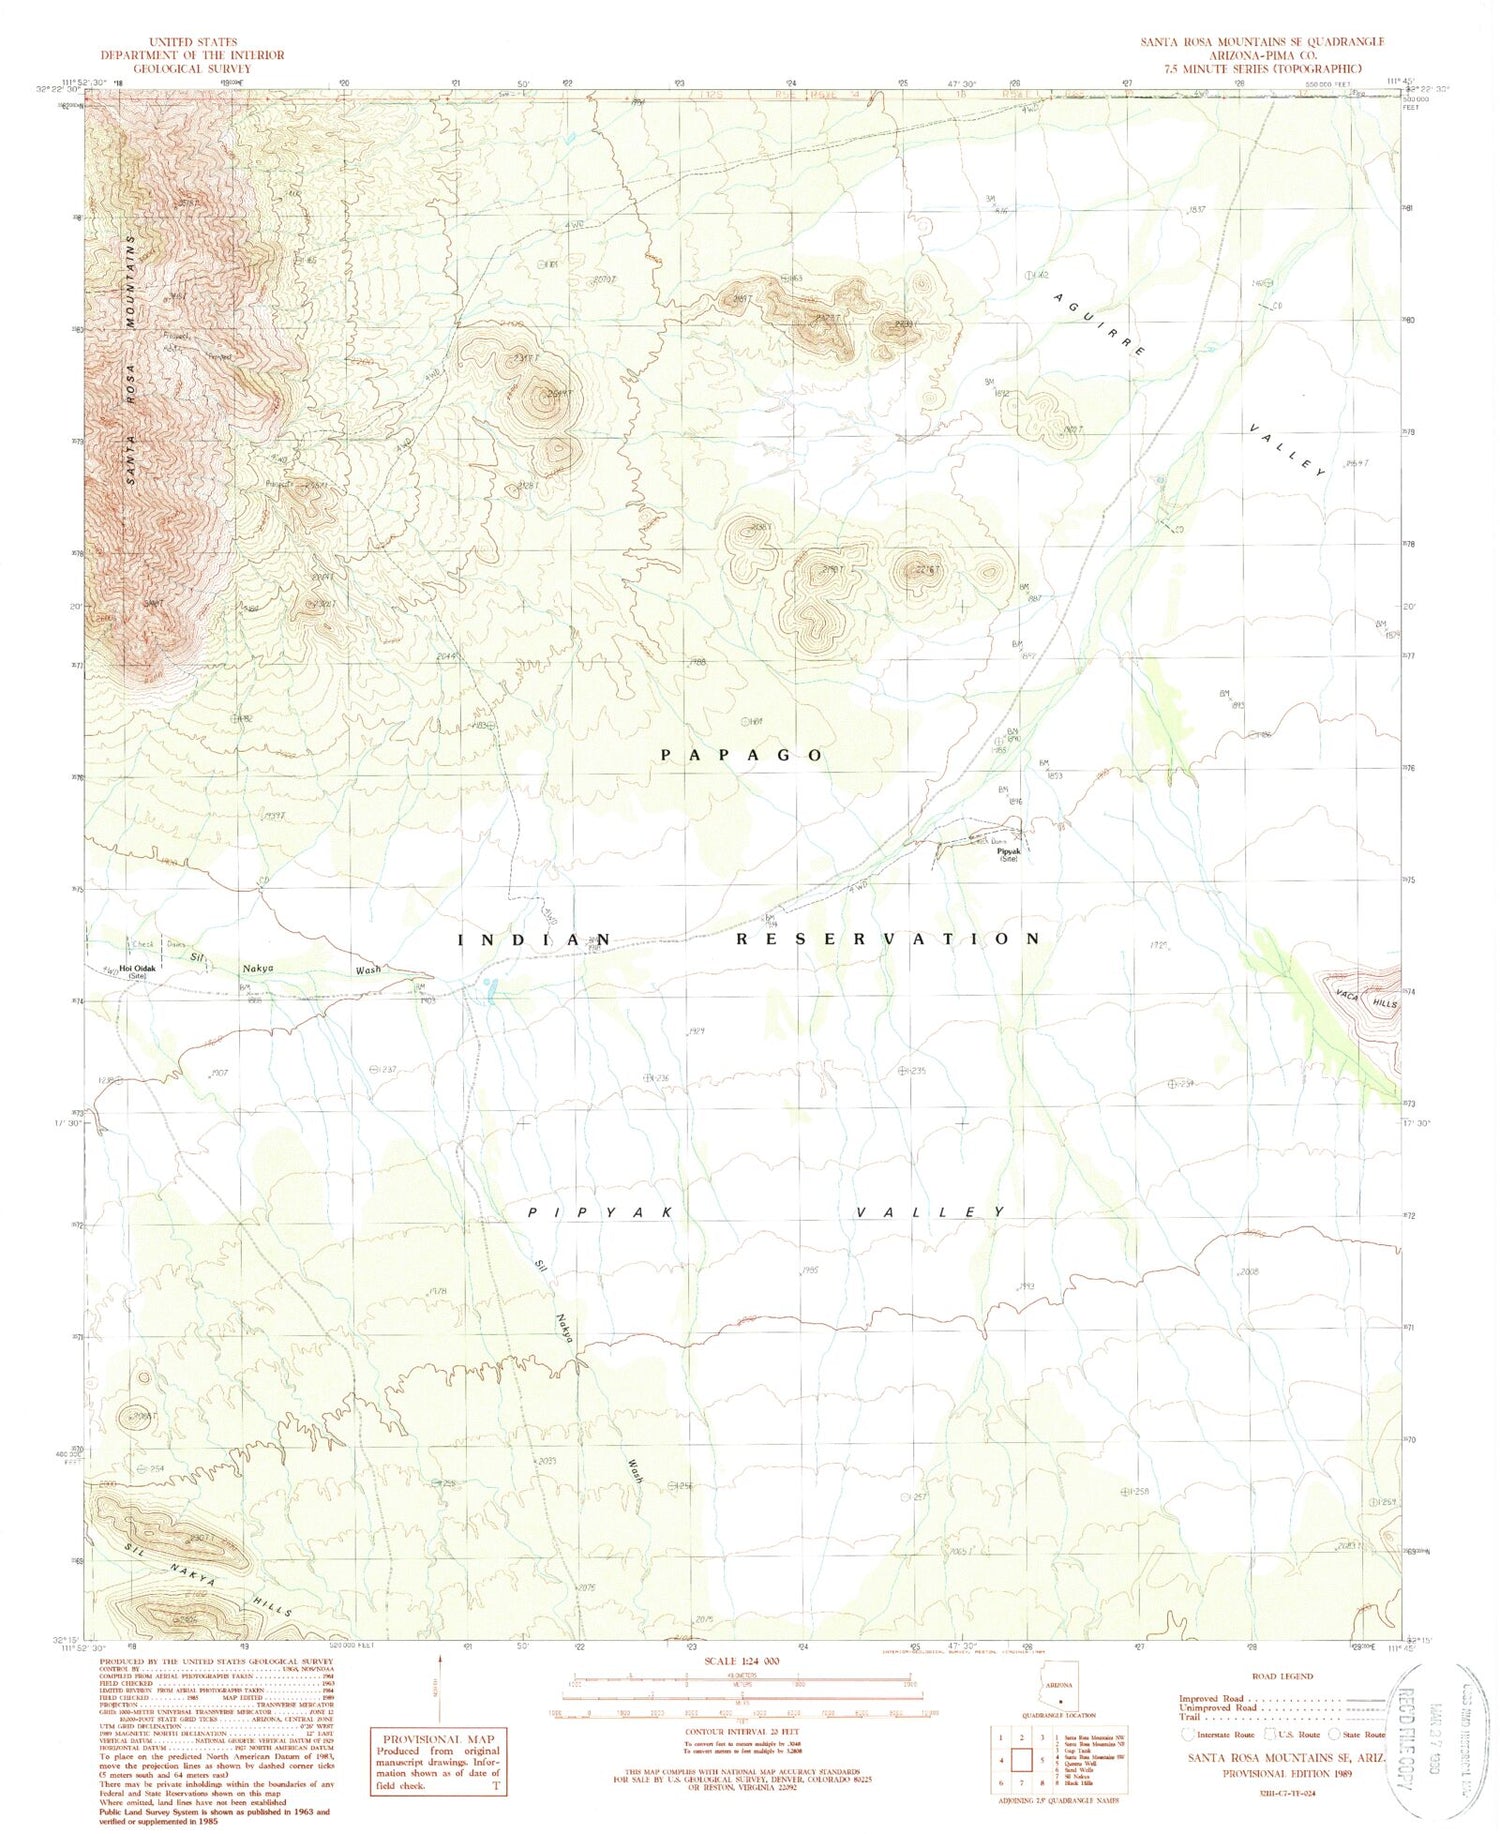 Classic USGS Santa Rosa Mountains SE Arizona 7.5'x7.5' Topo Map Image